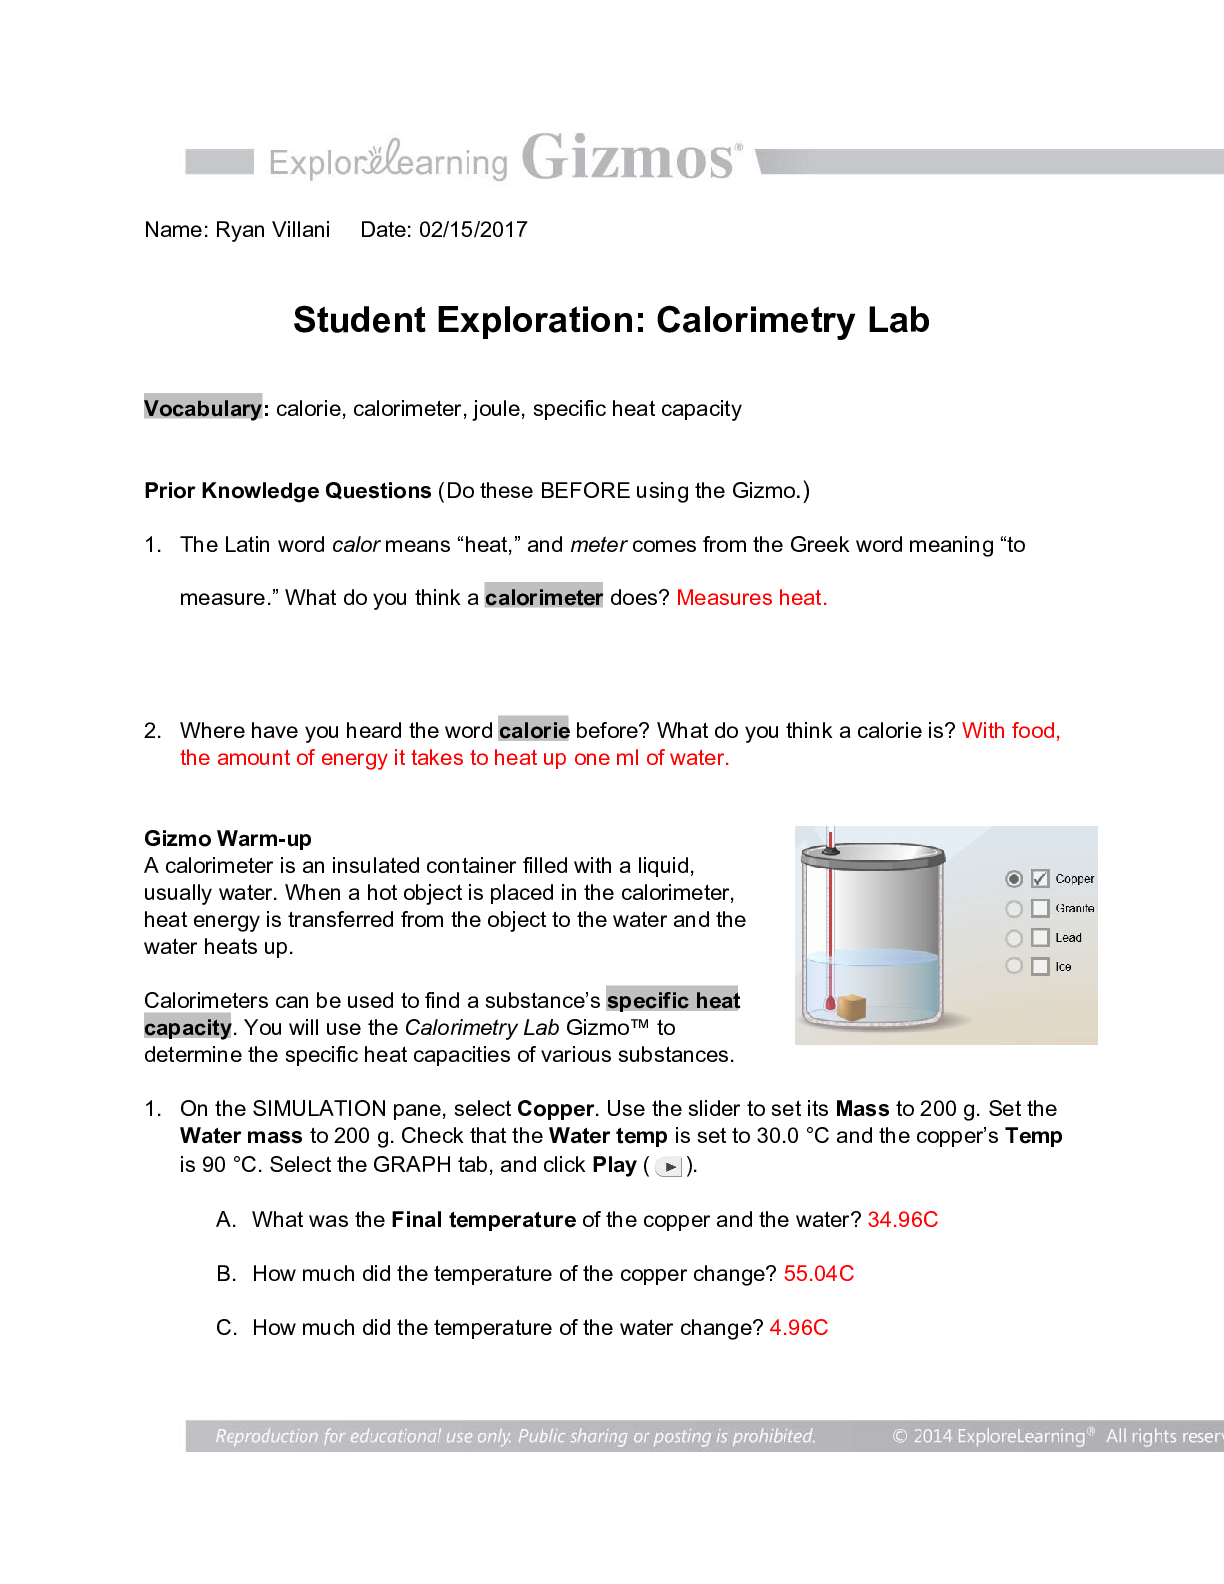 Student Exploration: Calorimetry Lab with verified answers